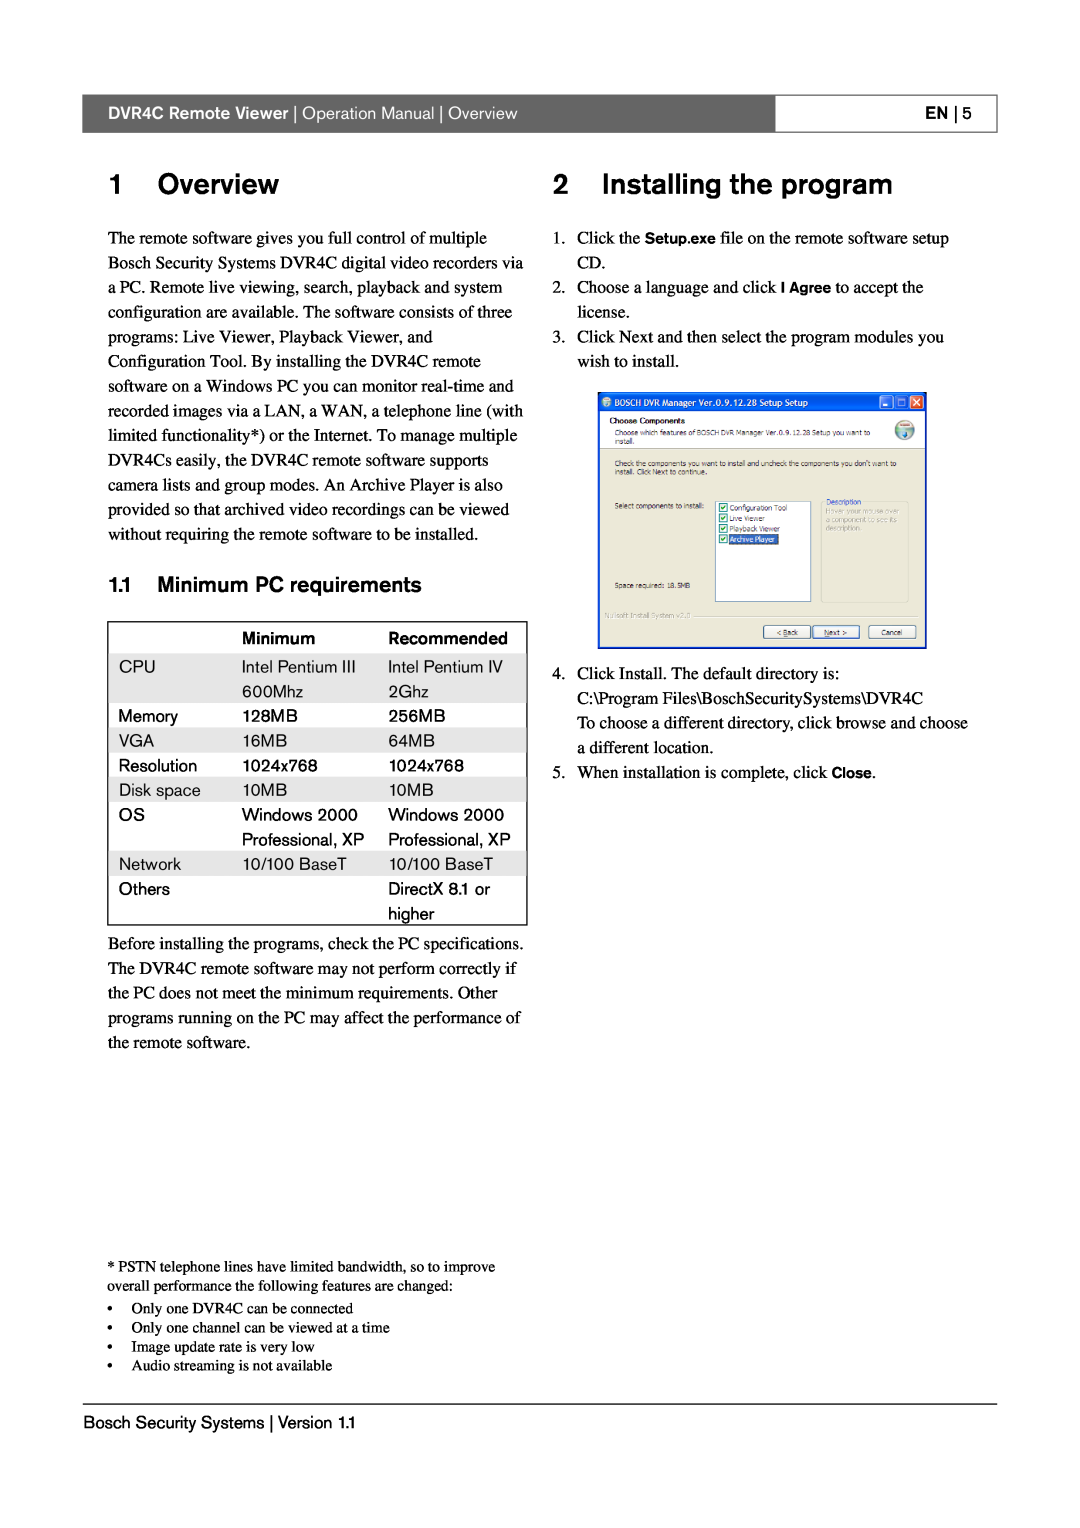 Bosch Appliances DVR4C operation manual Overview, Installing the program, 1.1Minimum PC requirements 